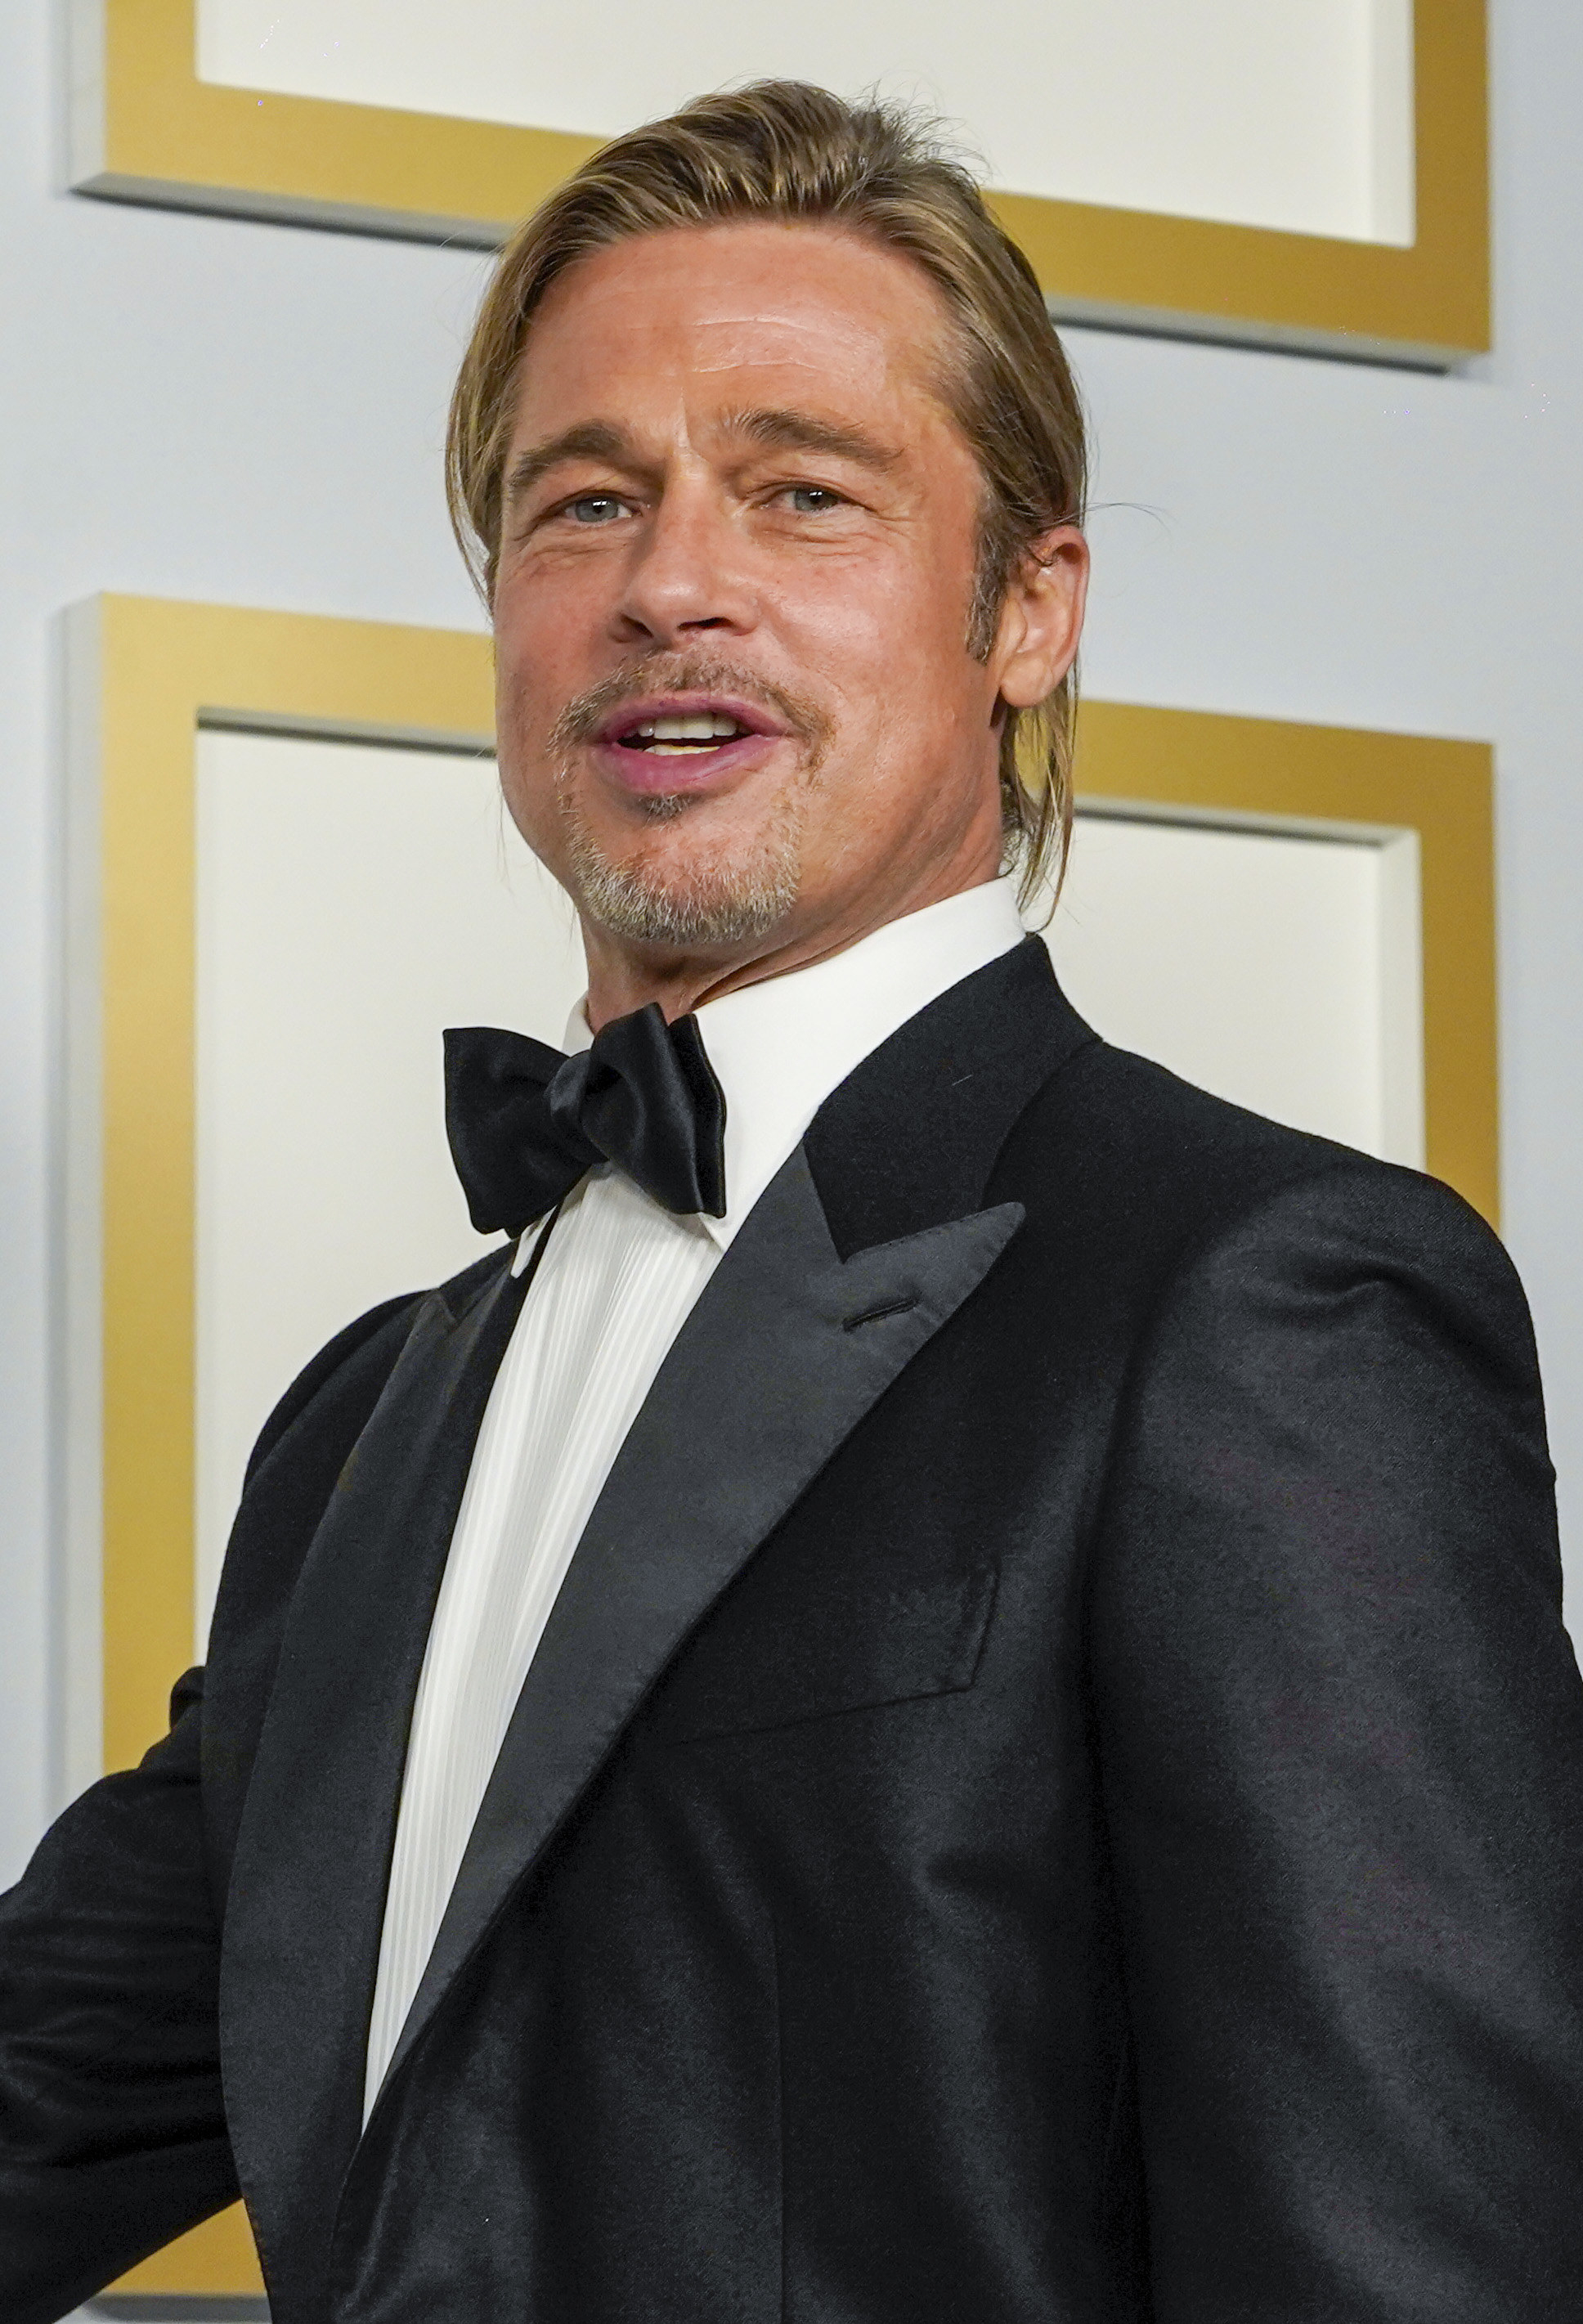 Brad Pitt at an awards function